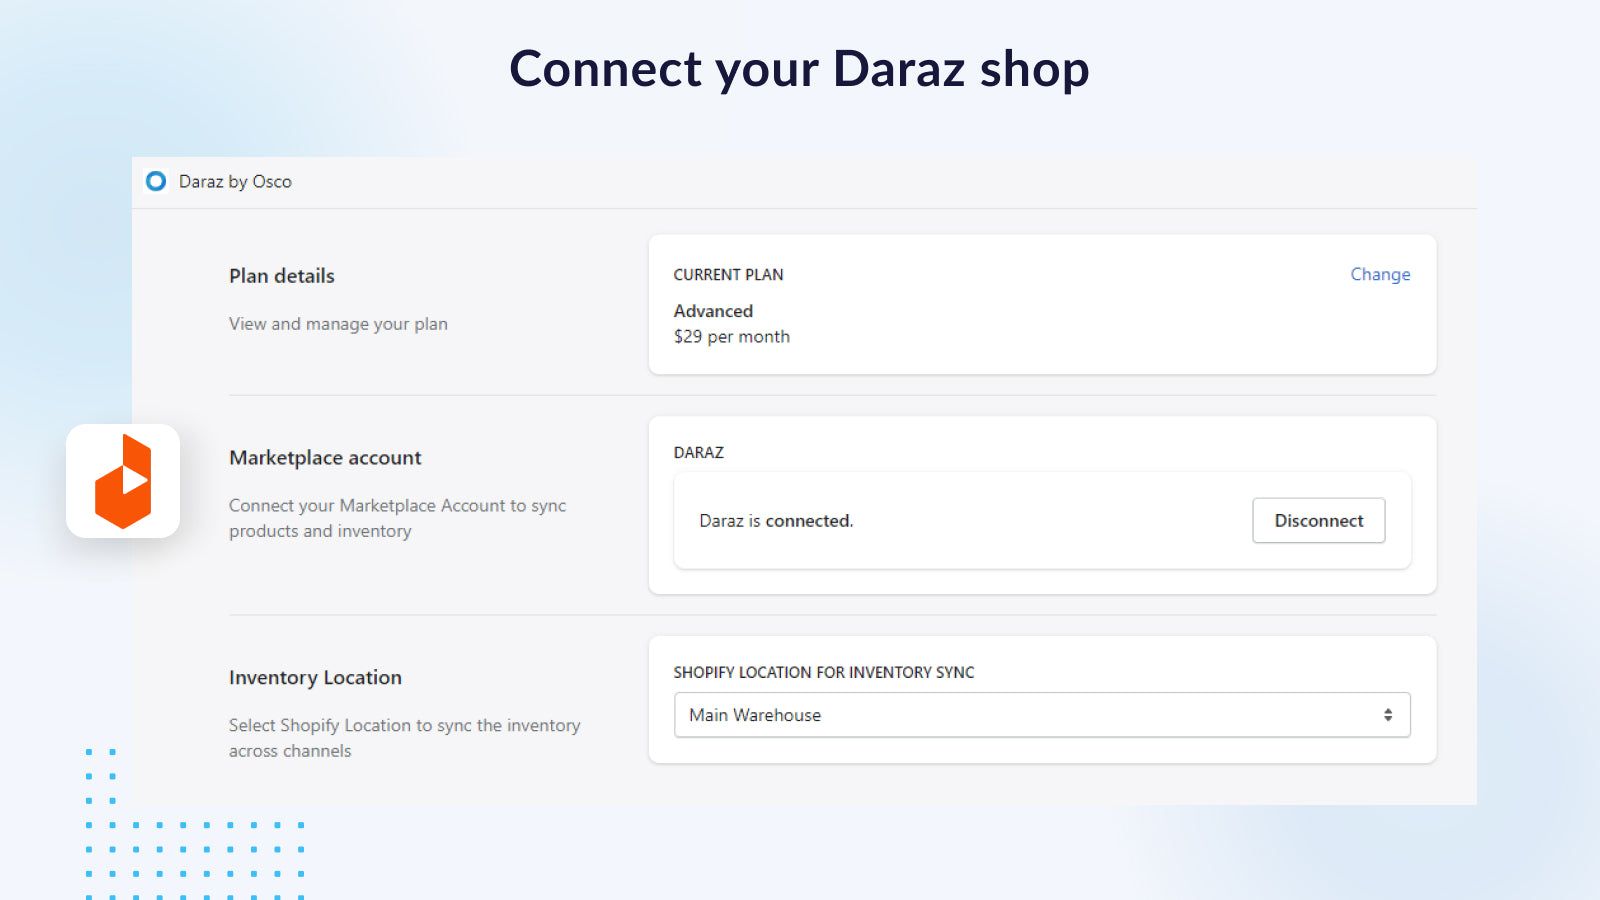 Connect to Daraz shop